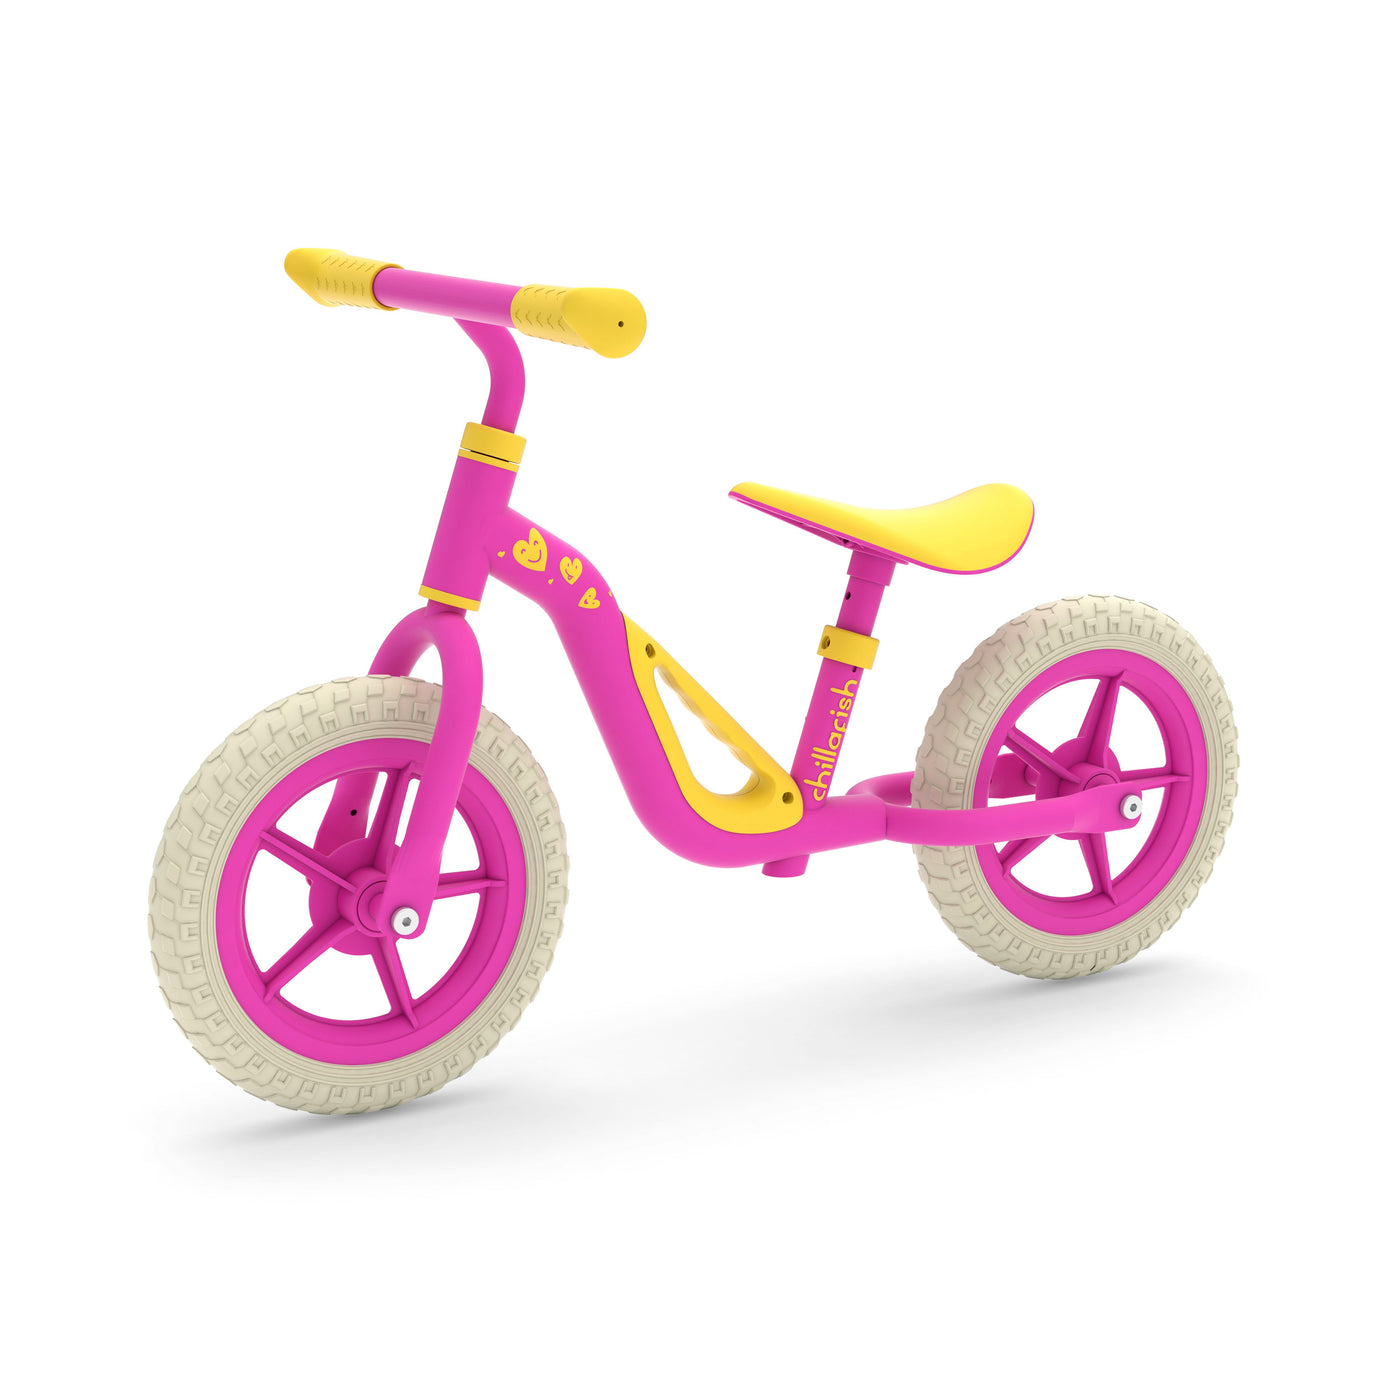 Charlie Lightweight 10" Balance Bike - Pink